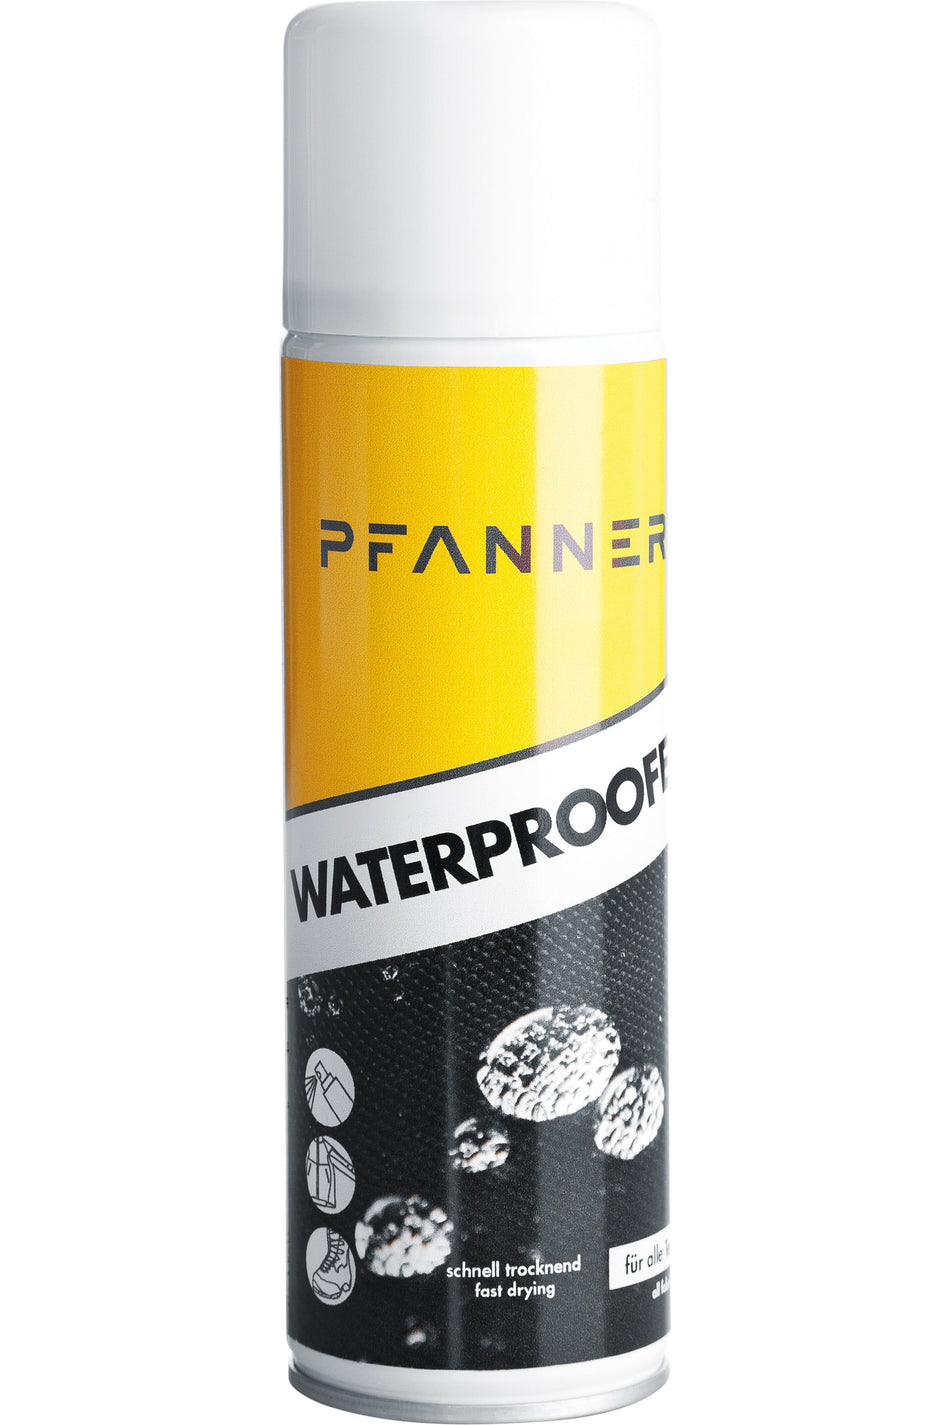 Pfanner Waterproofer - Anton's Timber